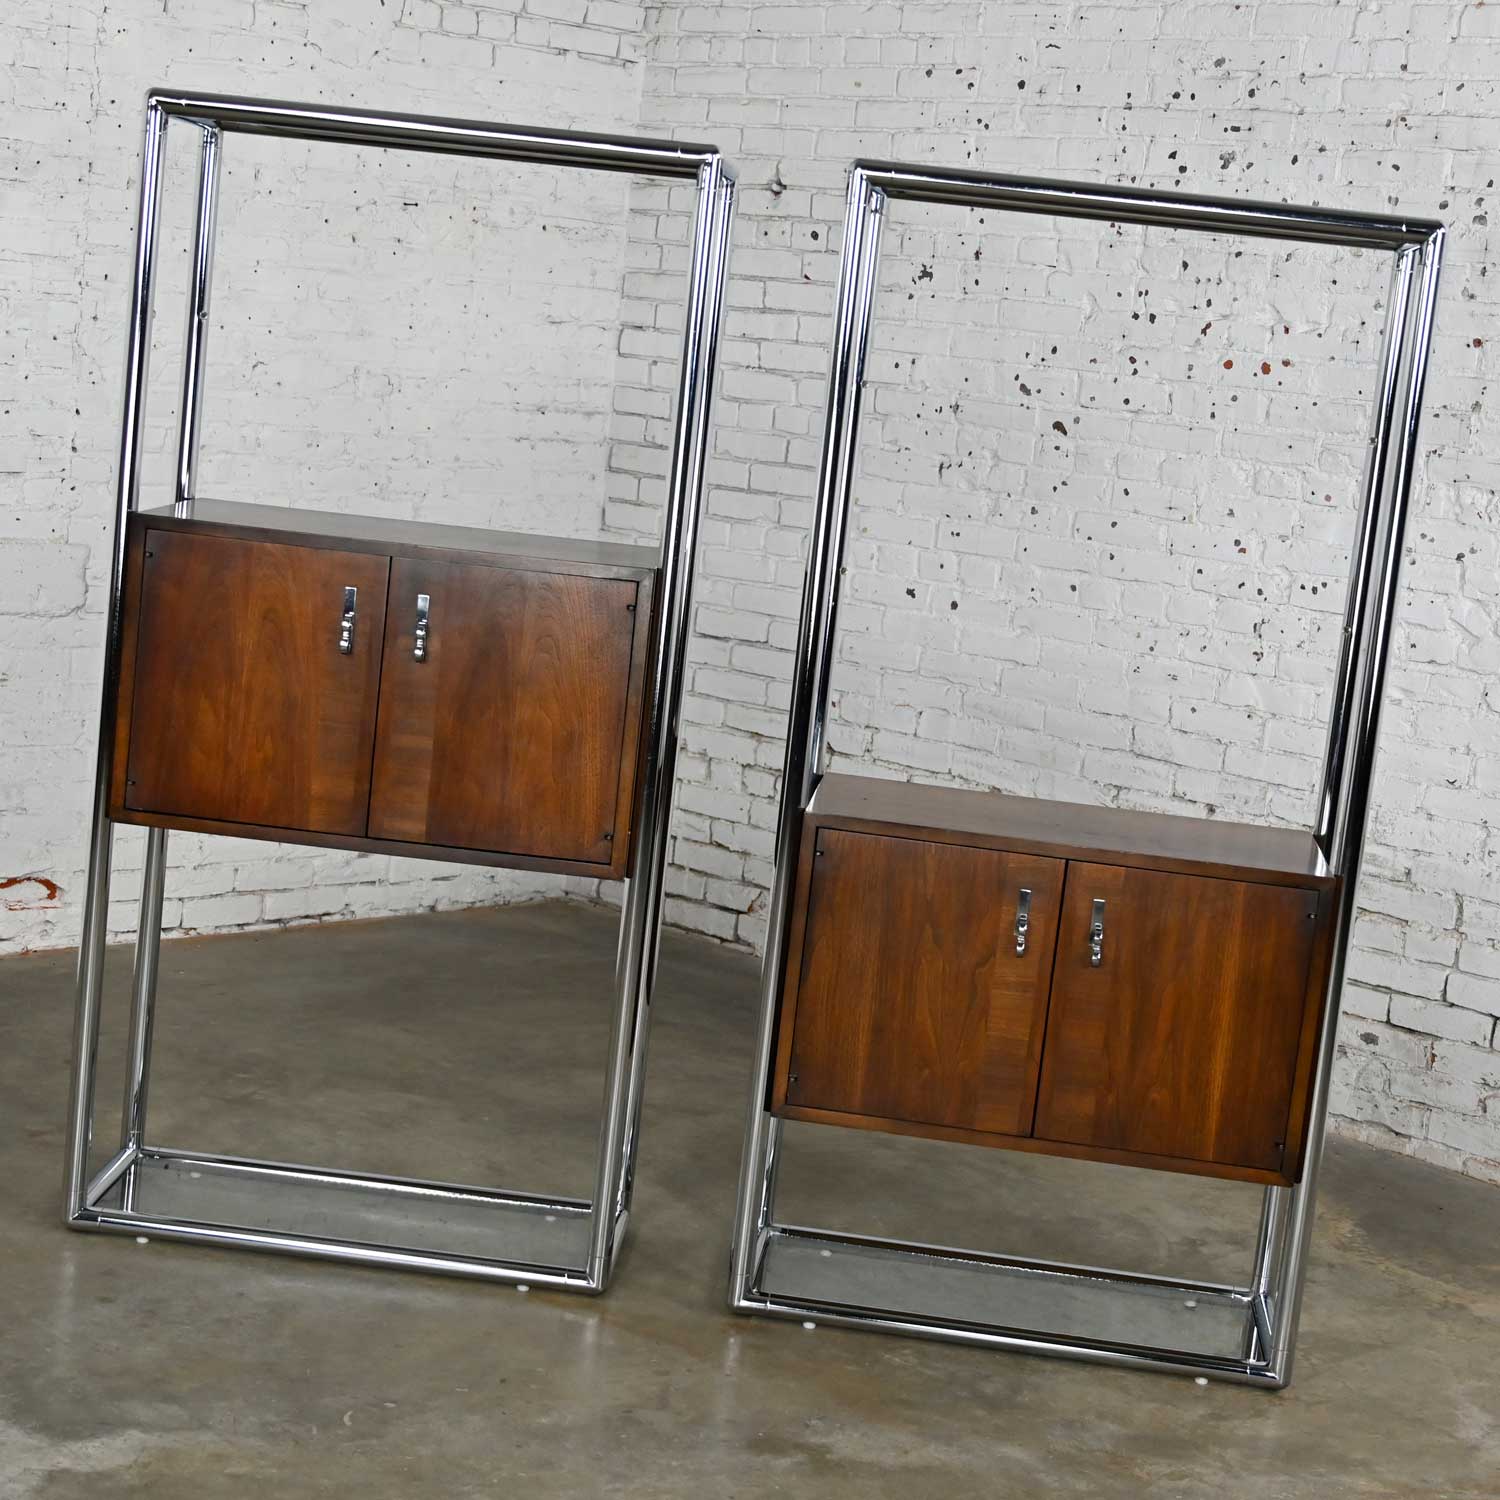 MCM Chrome & Walnut Veneer Entertainment Display Cabinet or Room Divider 3 Piece Unit by Lane Furniture